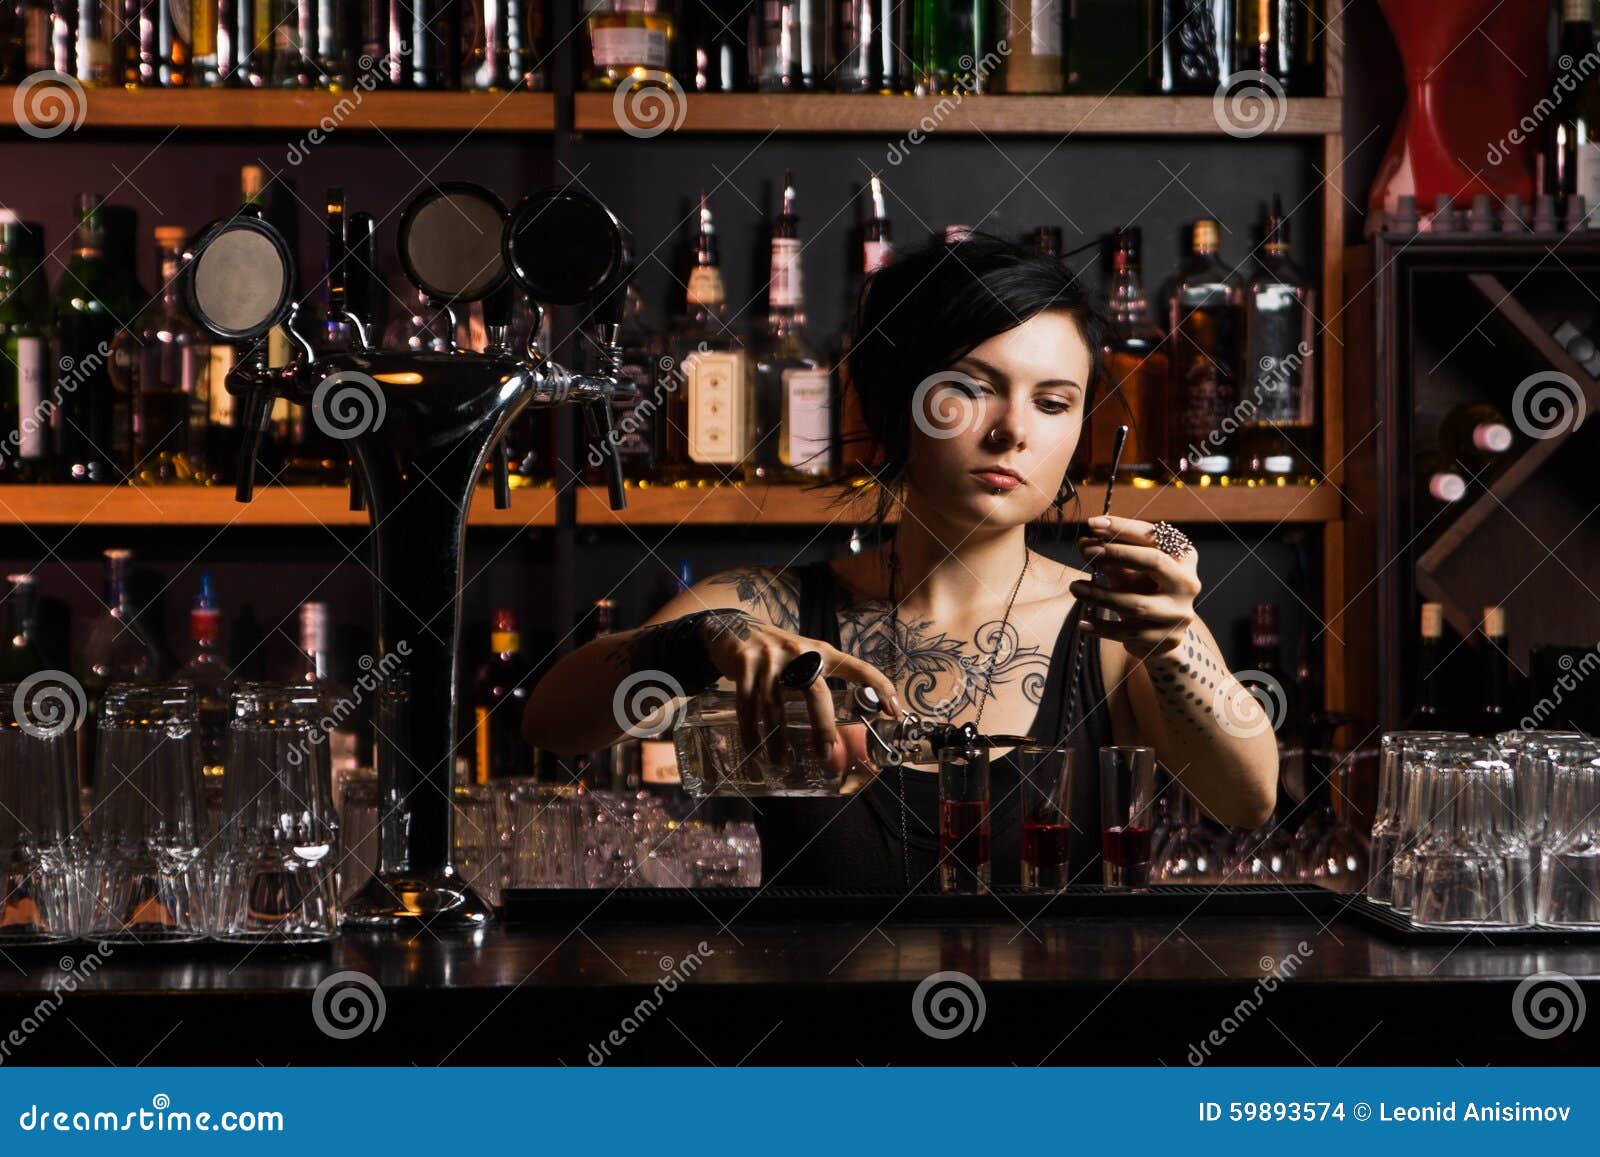 attractive bartender